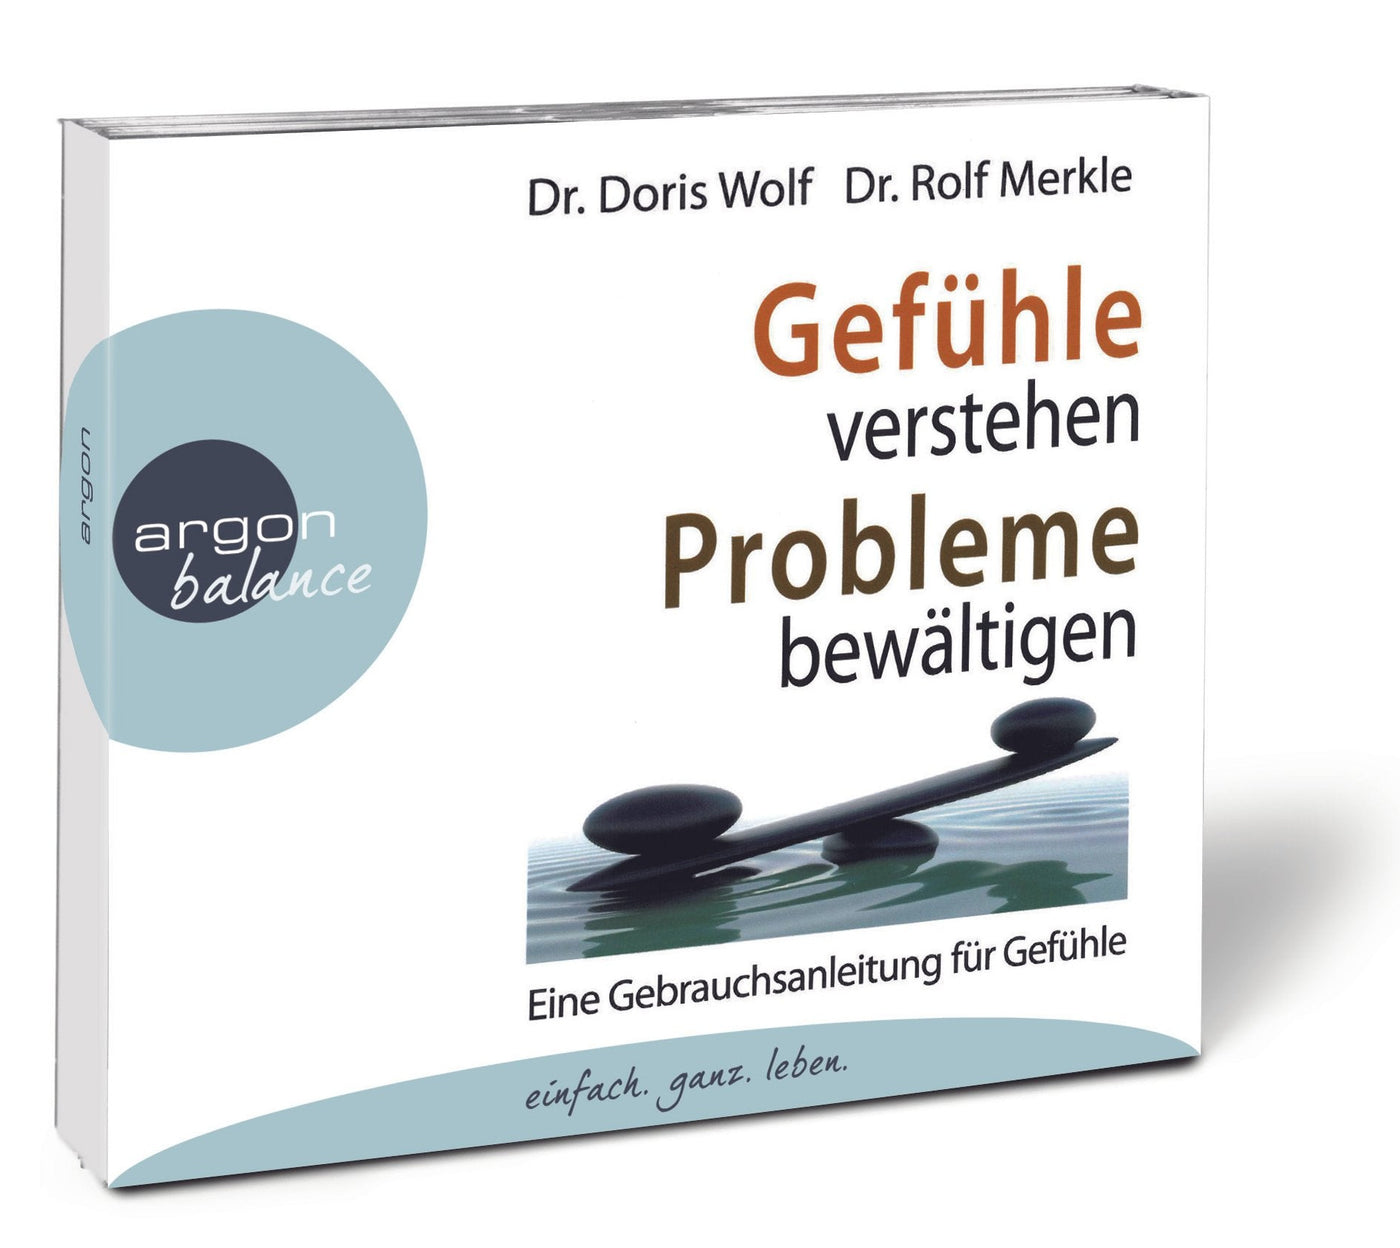 Hörbuch Gefühle verstehen Dr. Rolf Merkle Dr. Doris Wolf PAL Verlag